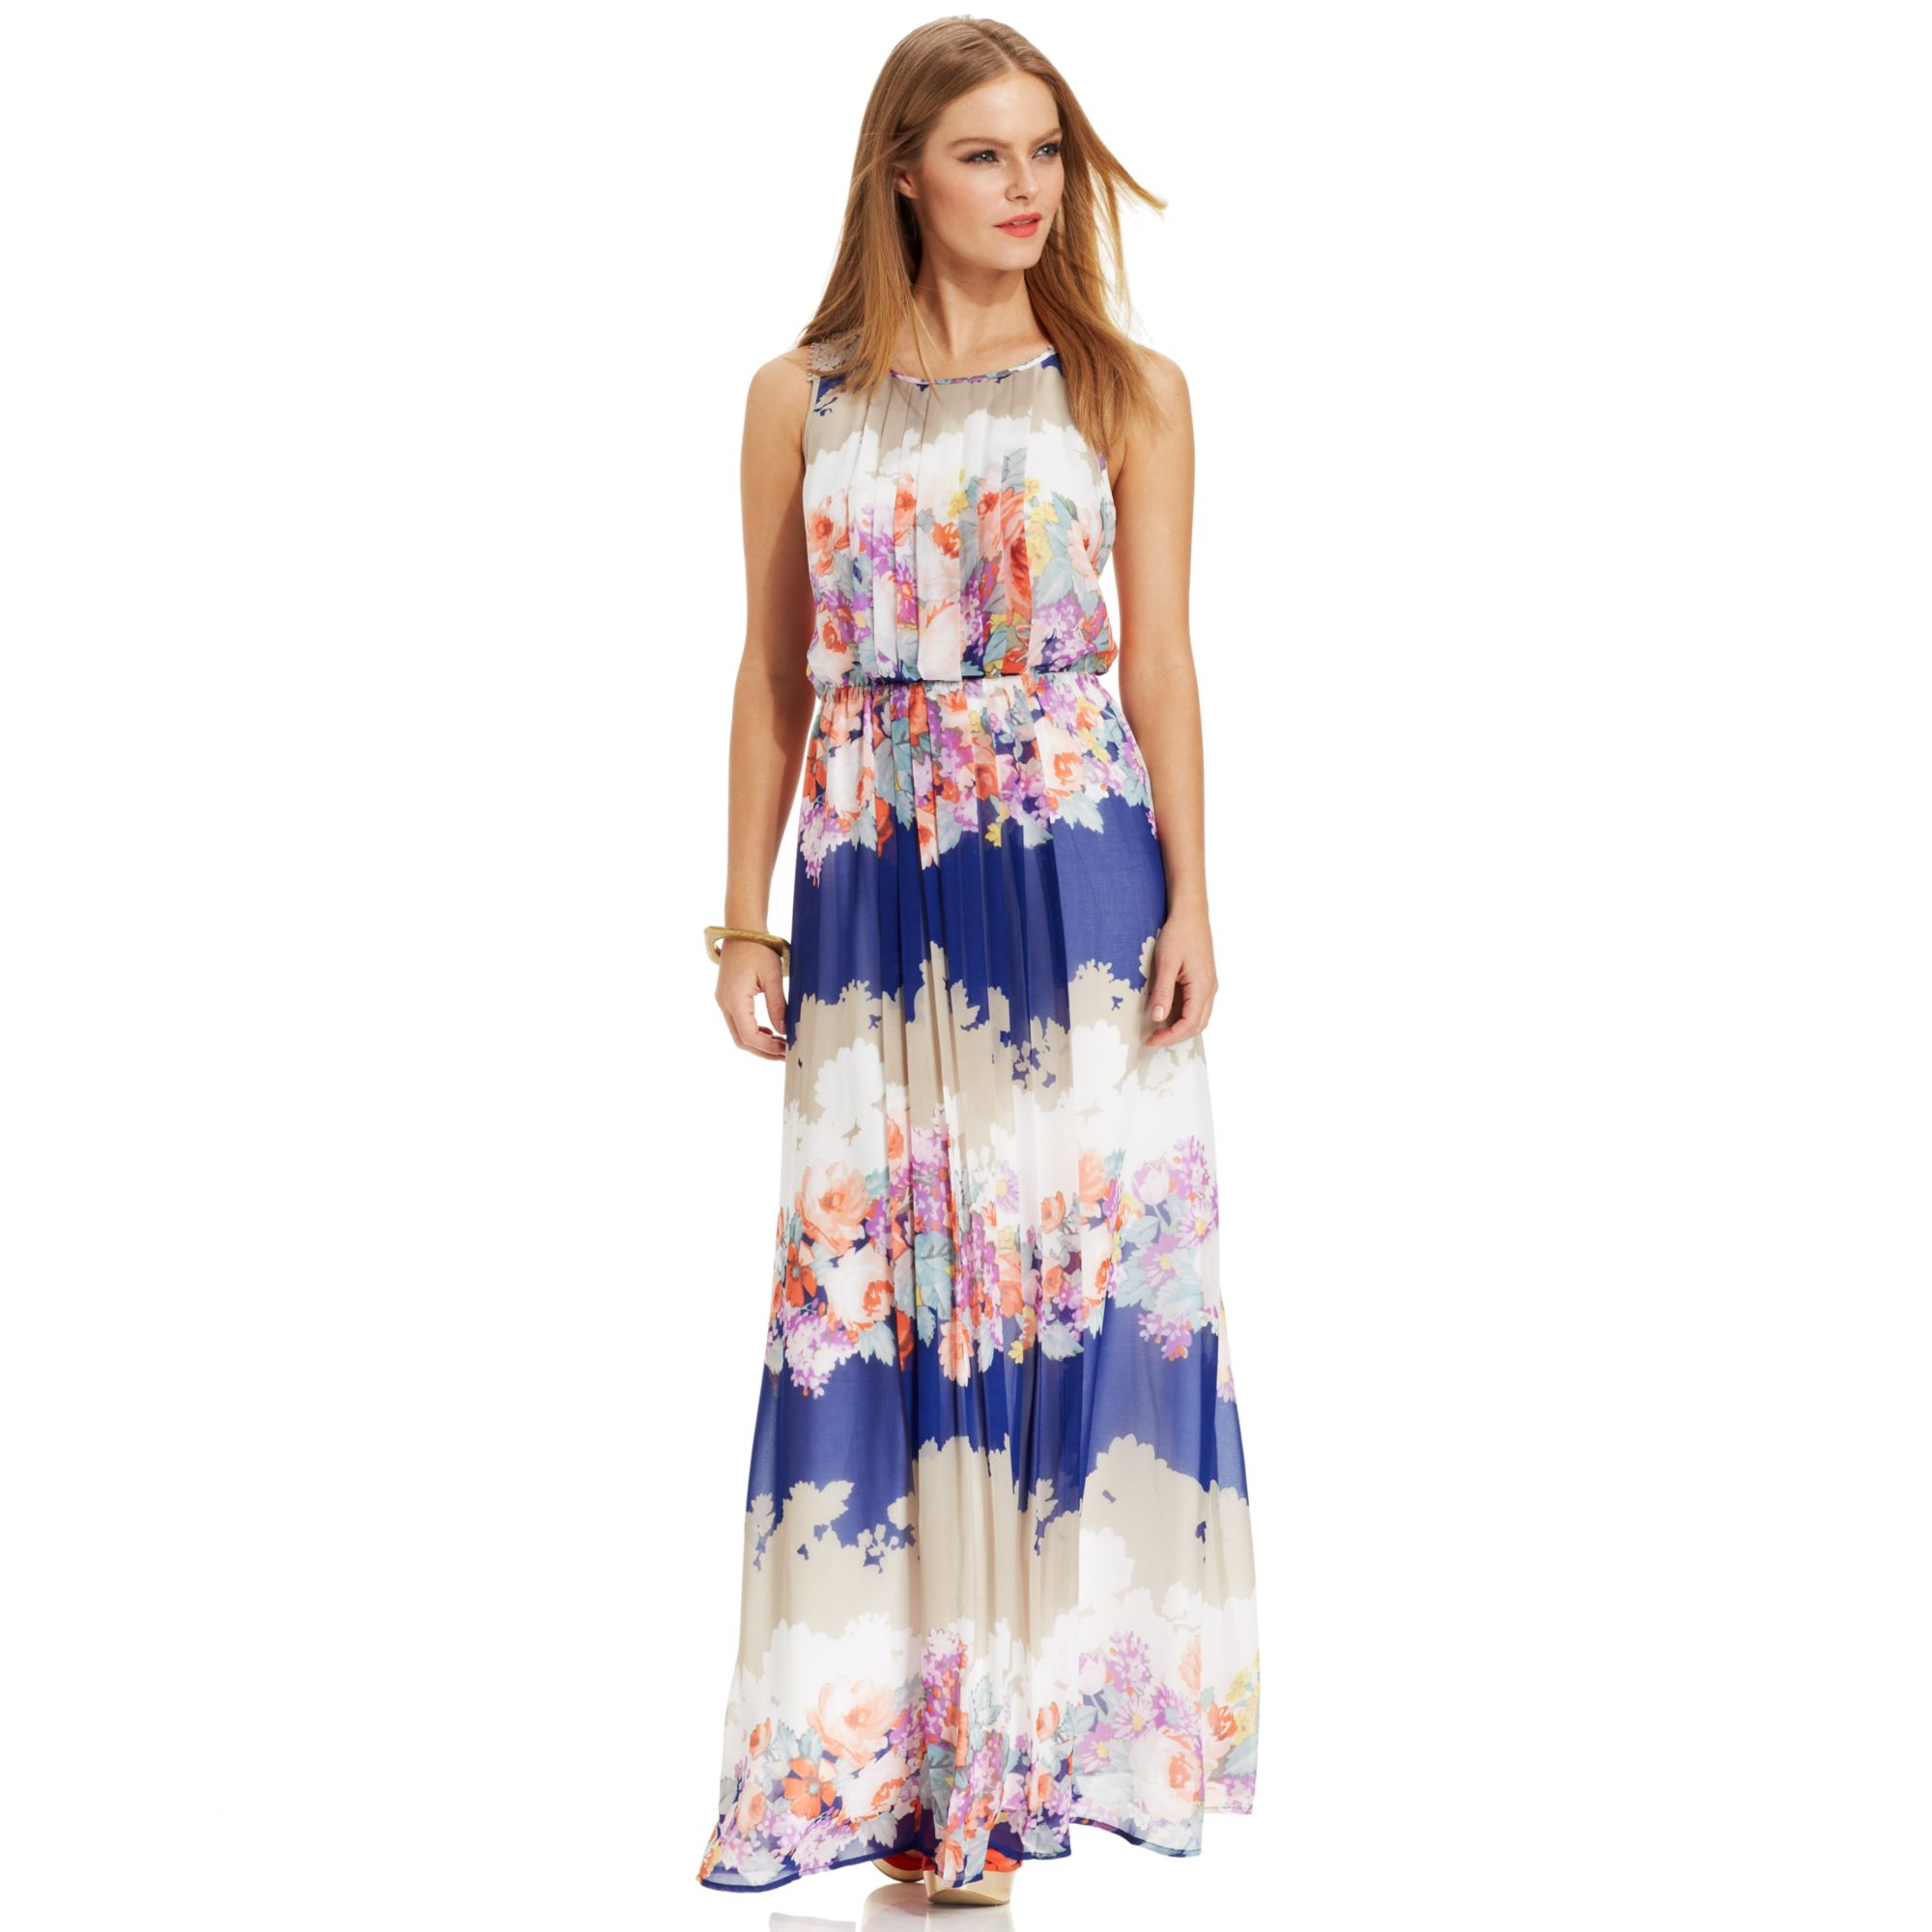 Lyst - Jessica Simpson Laceback Floral Blouson Maxi Dress